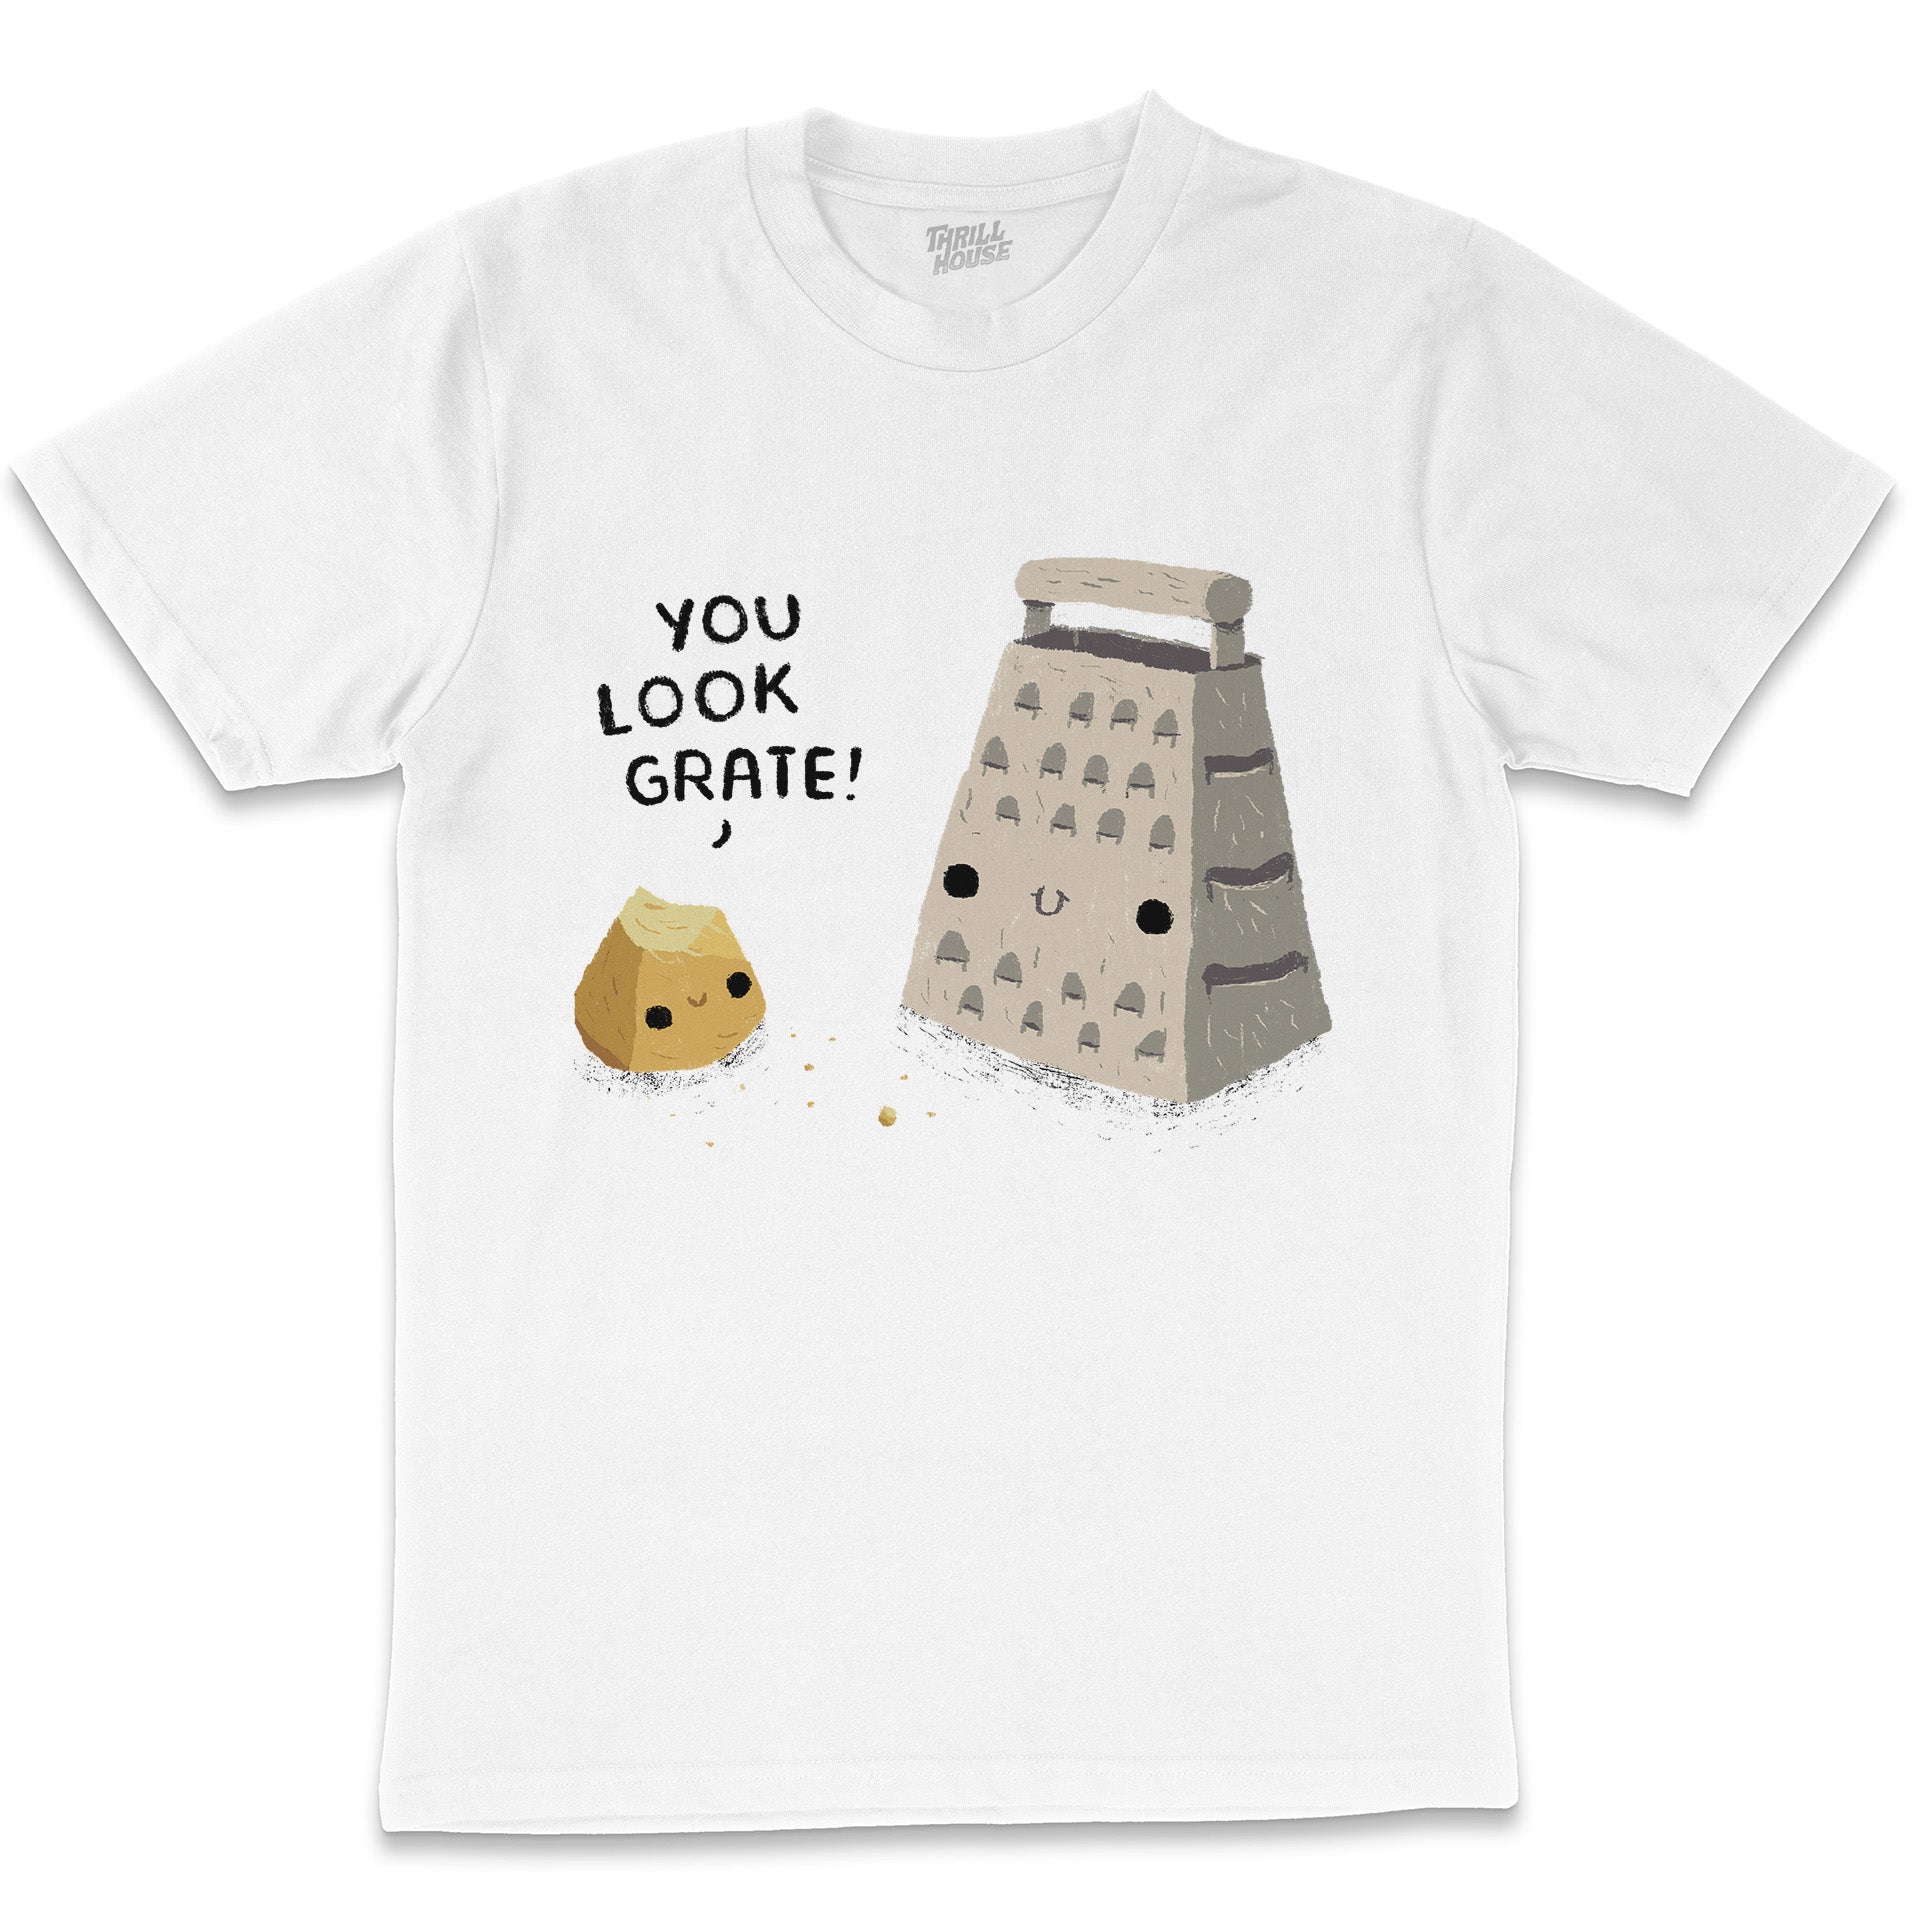 You Look Grate Funny Cheese Grater Foodie Parody Pun Slogan Humorous Fun Cotton T-Shirt